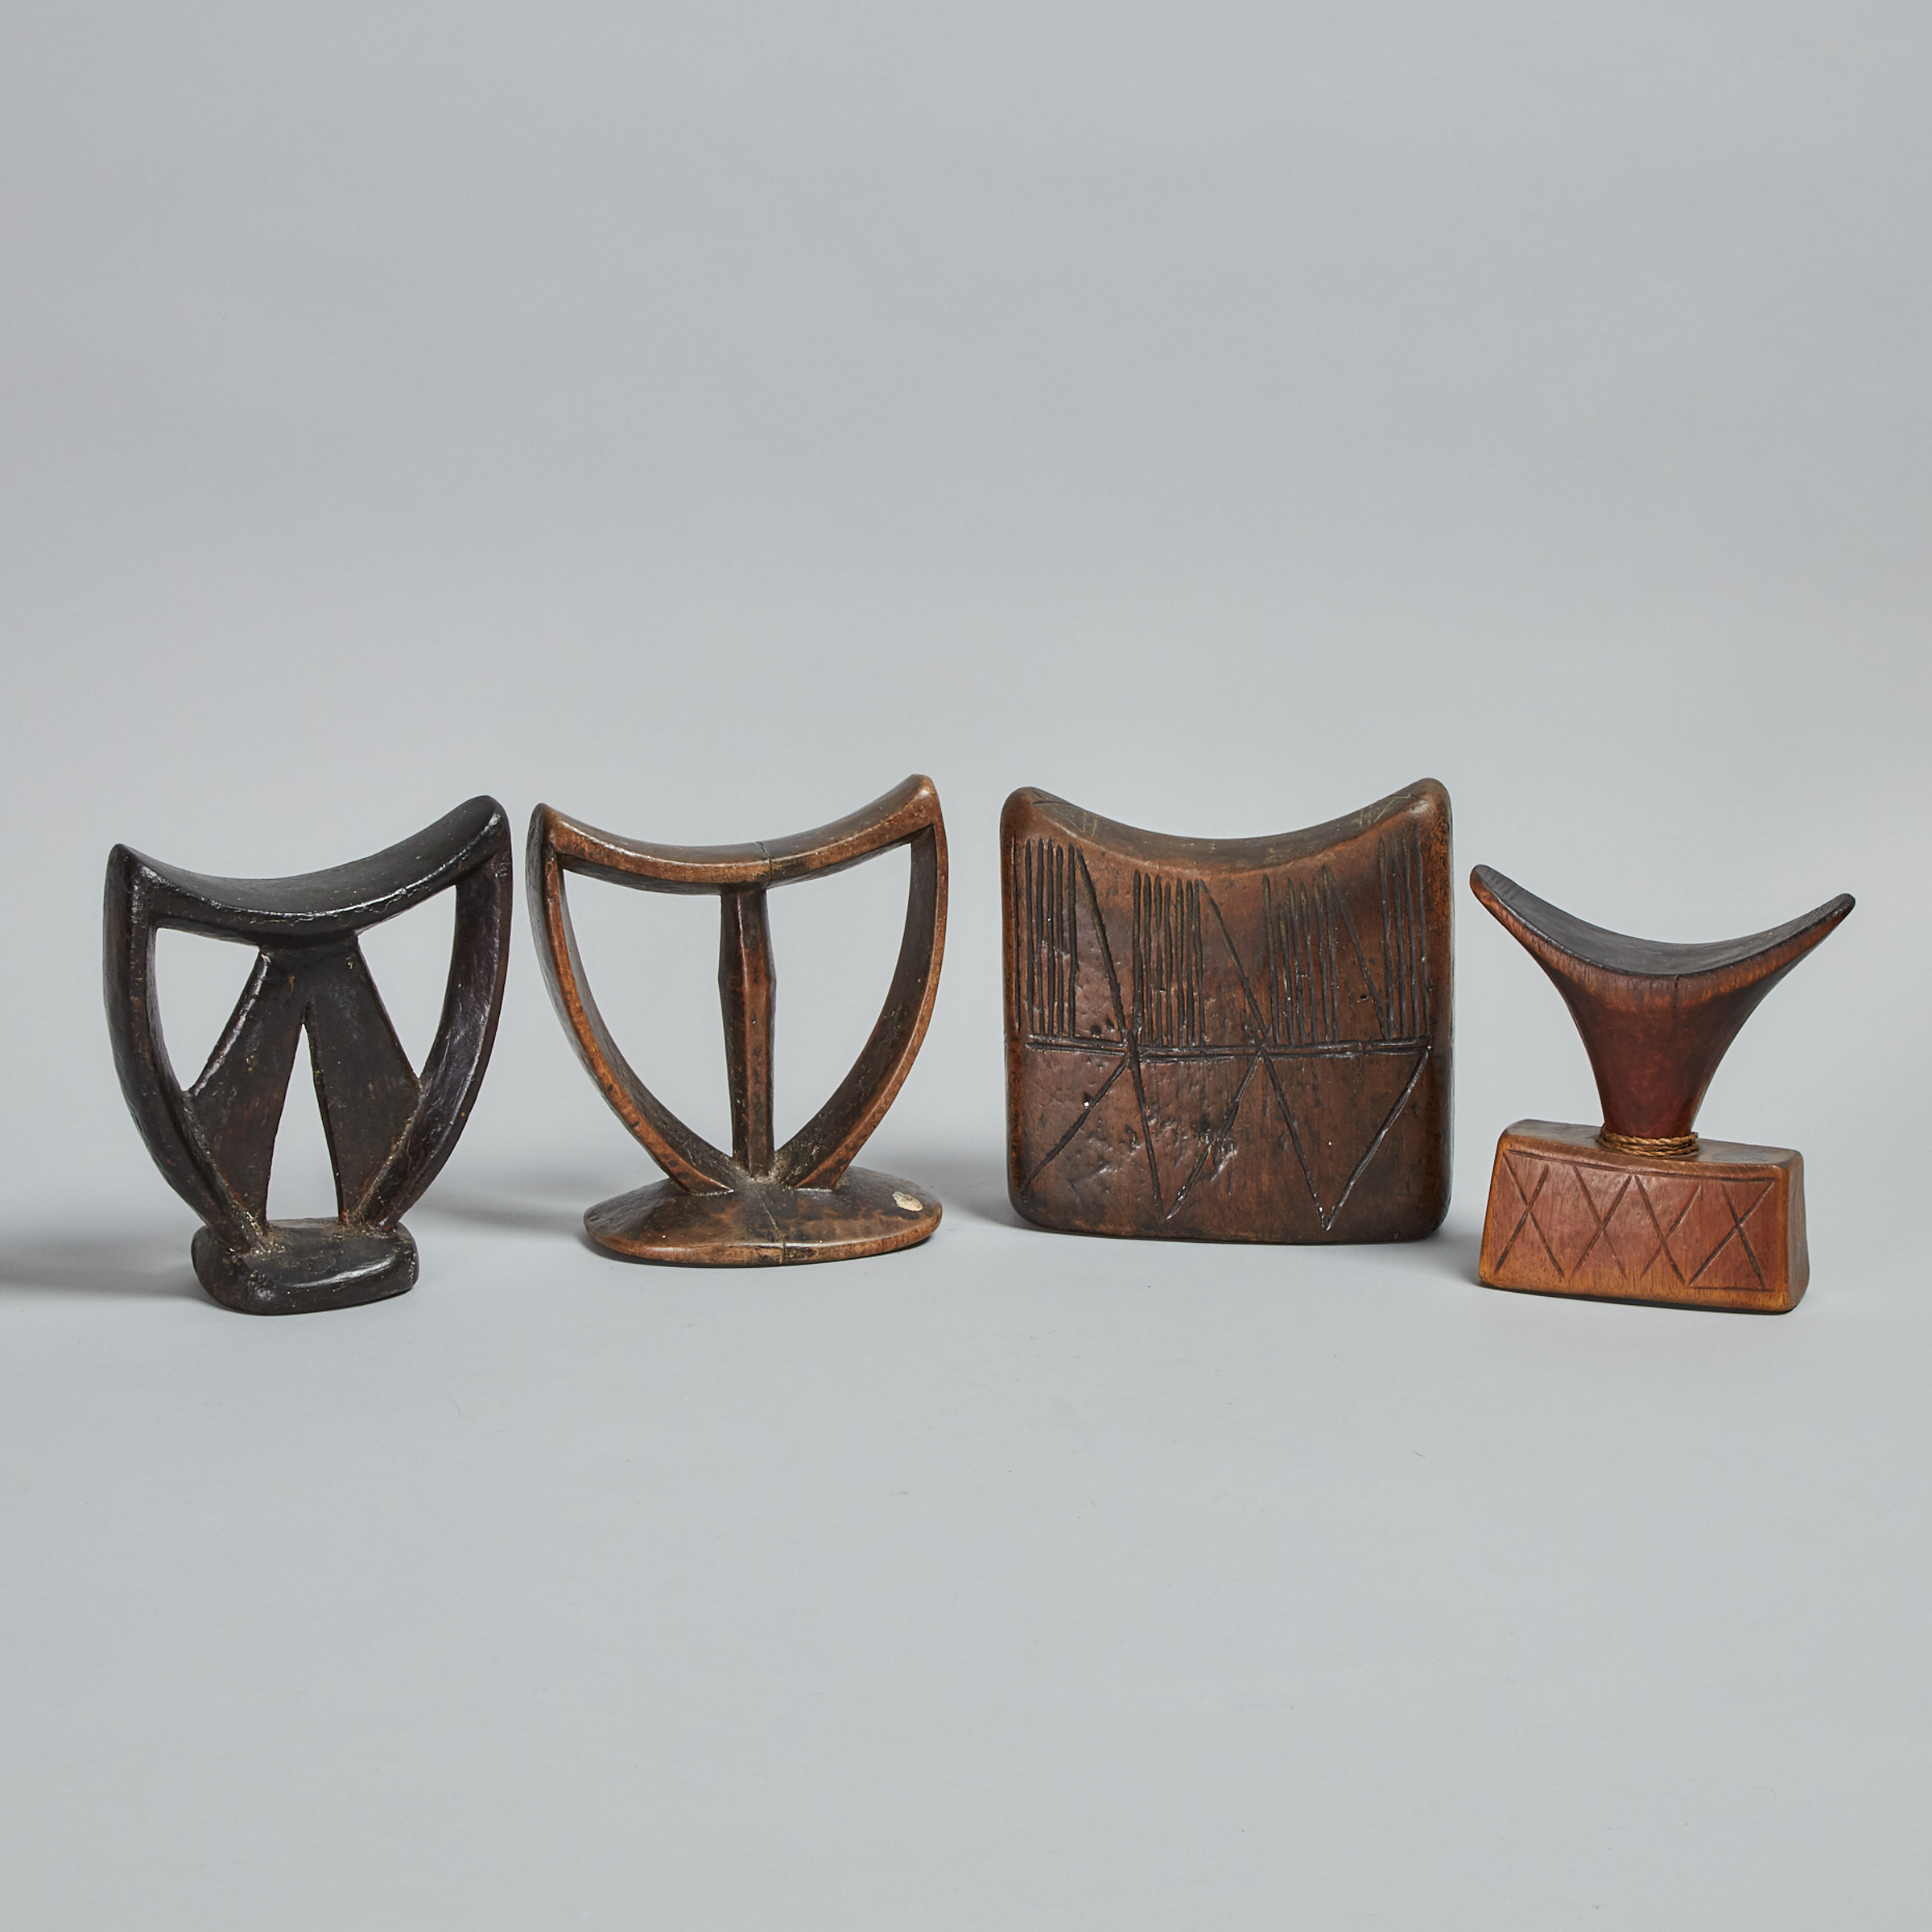 Sidamo, Kaffa and two Kambatta Carved Wood Headrests, Ethiopia, East Africa